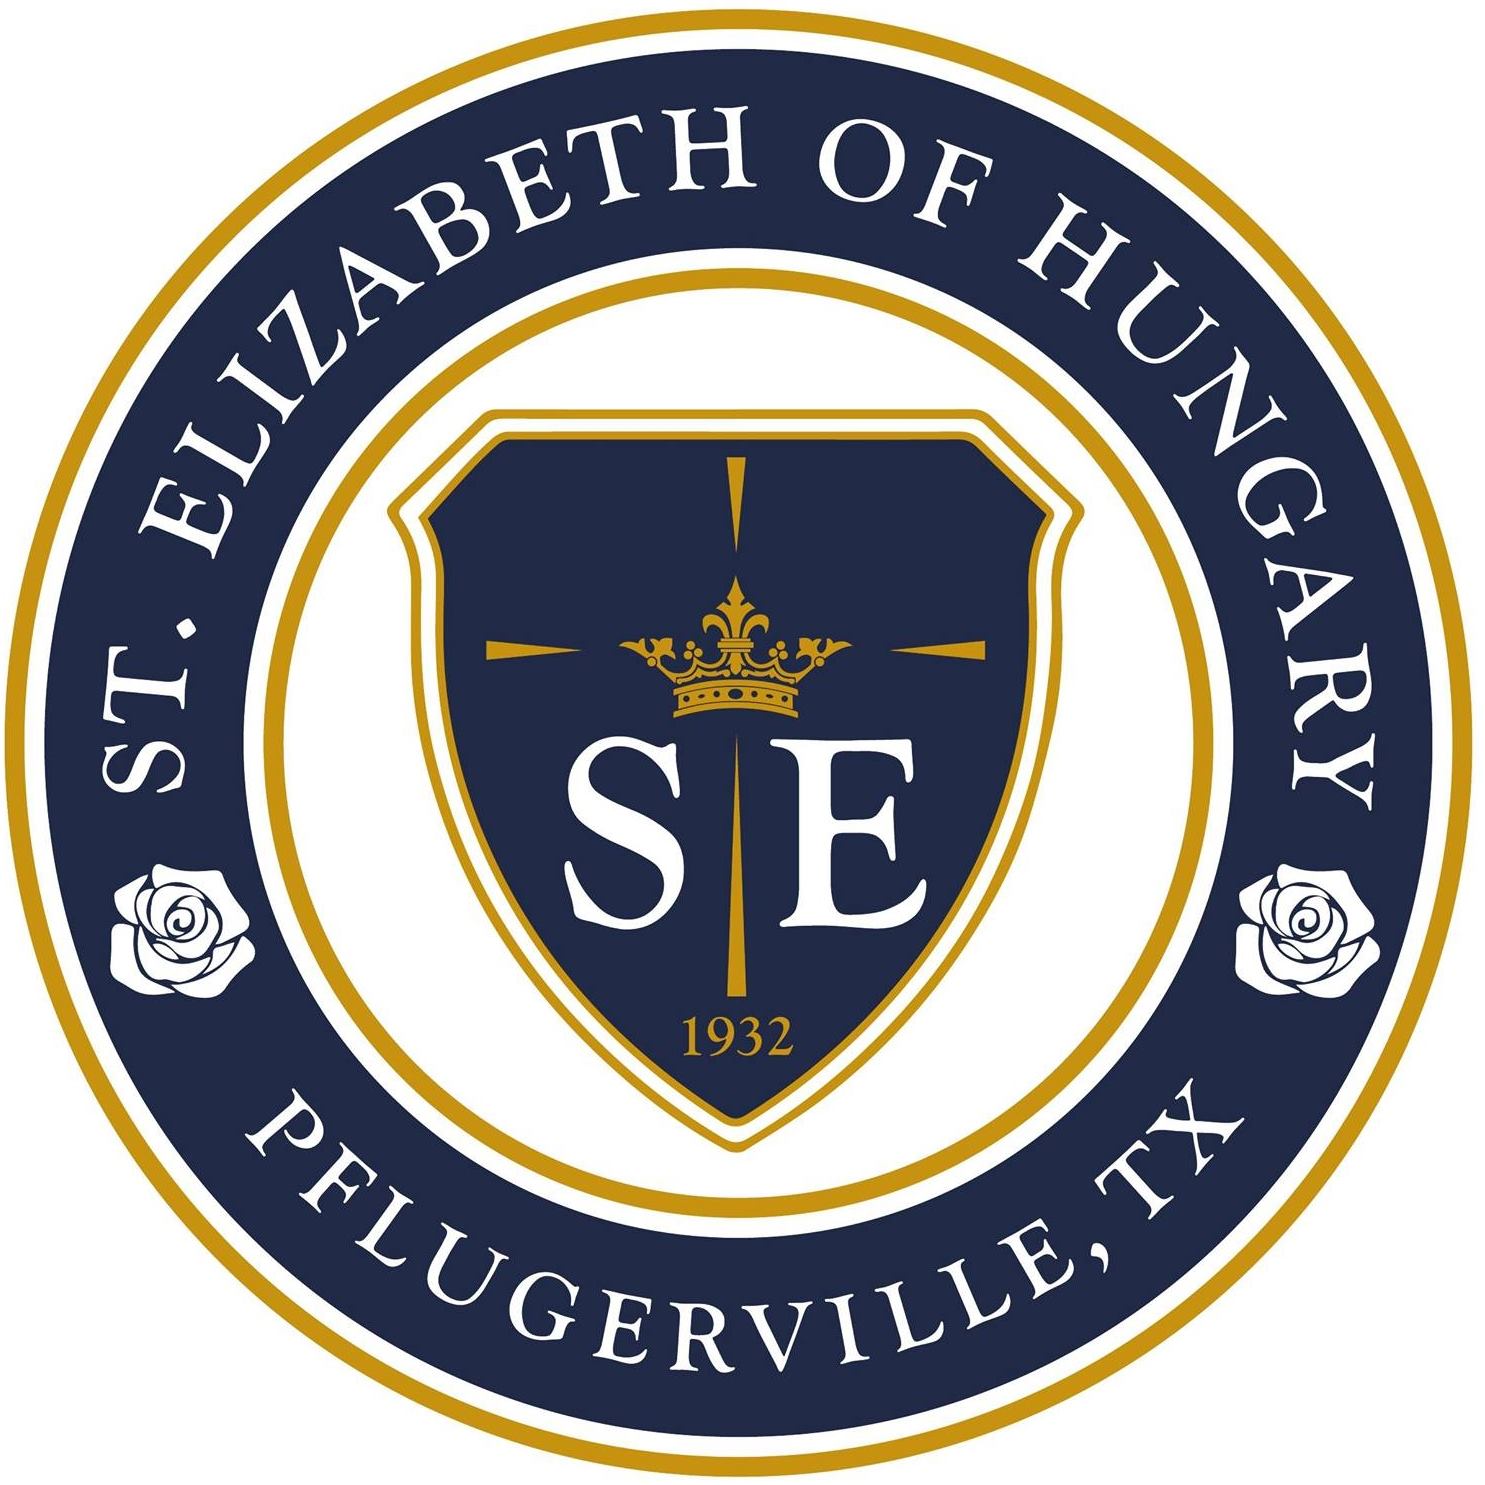 St. Elizabeth Catholic Church Society of St. Vincent de Paul